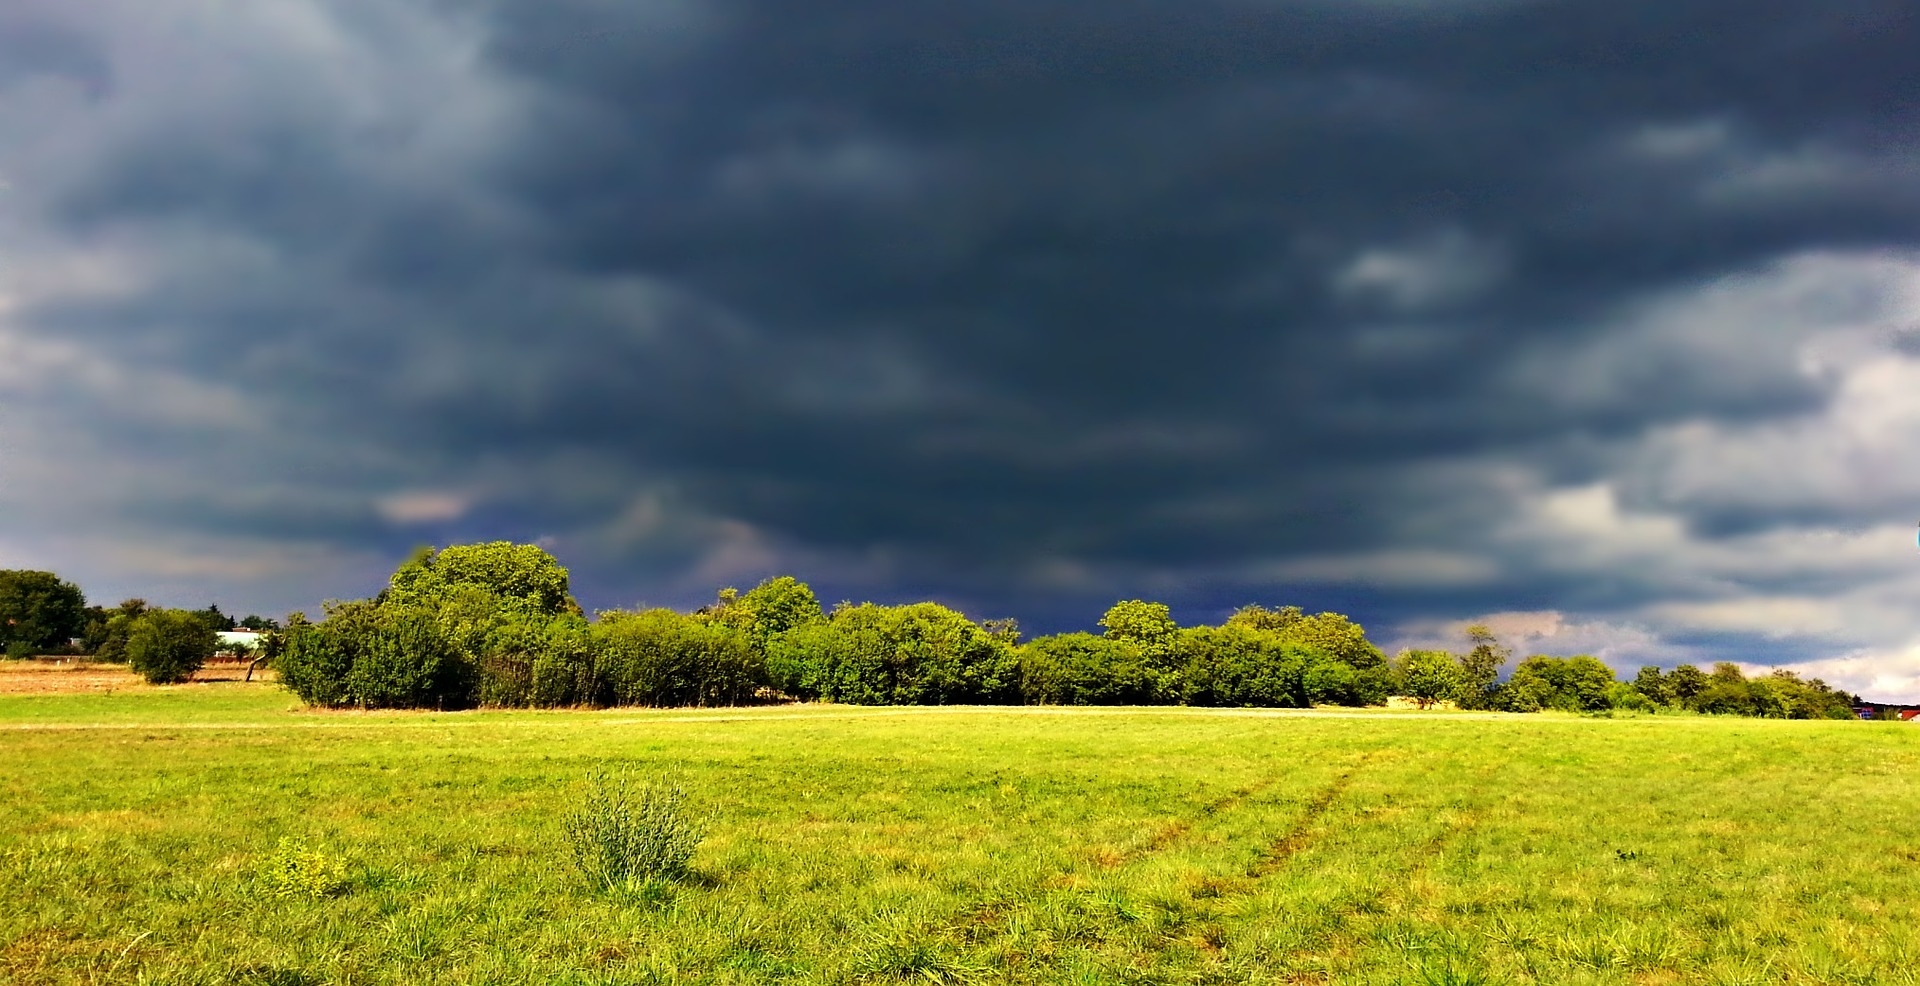 https://pixabay.com/en/clouds-storm-rain-field-meadow-2661397/